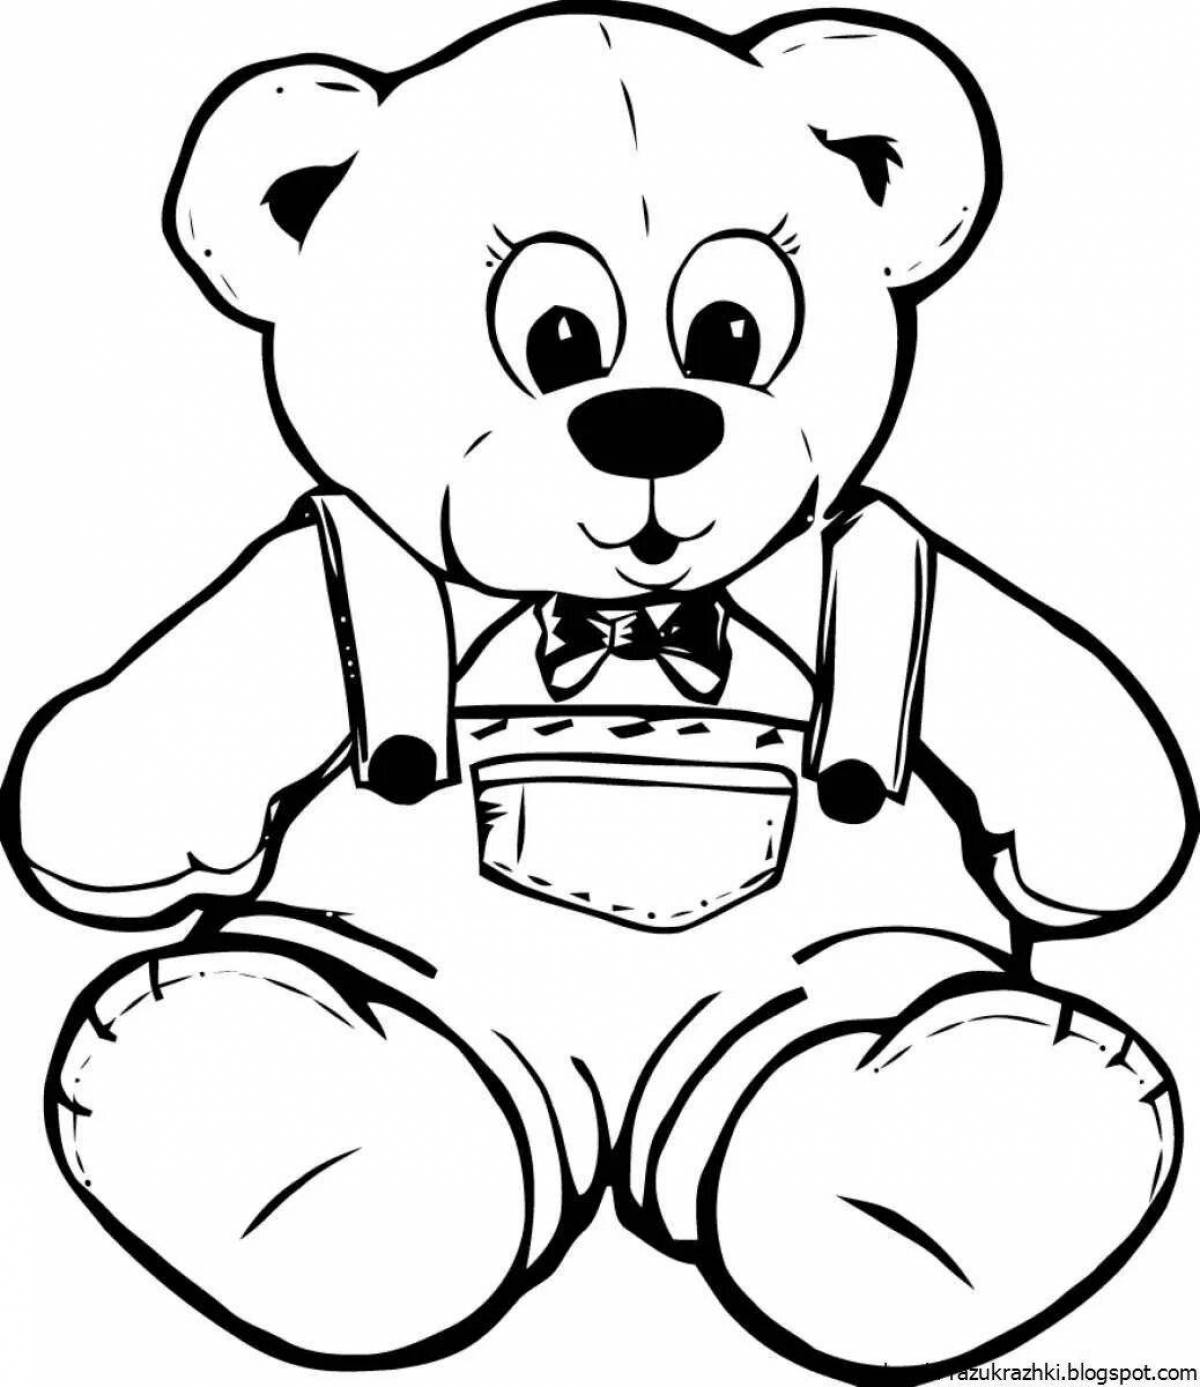 Bear toy #4